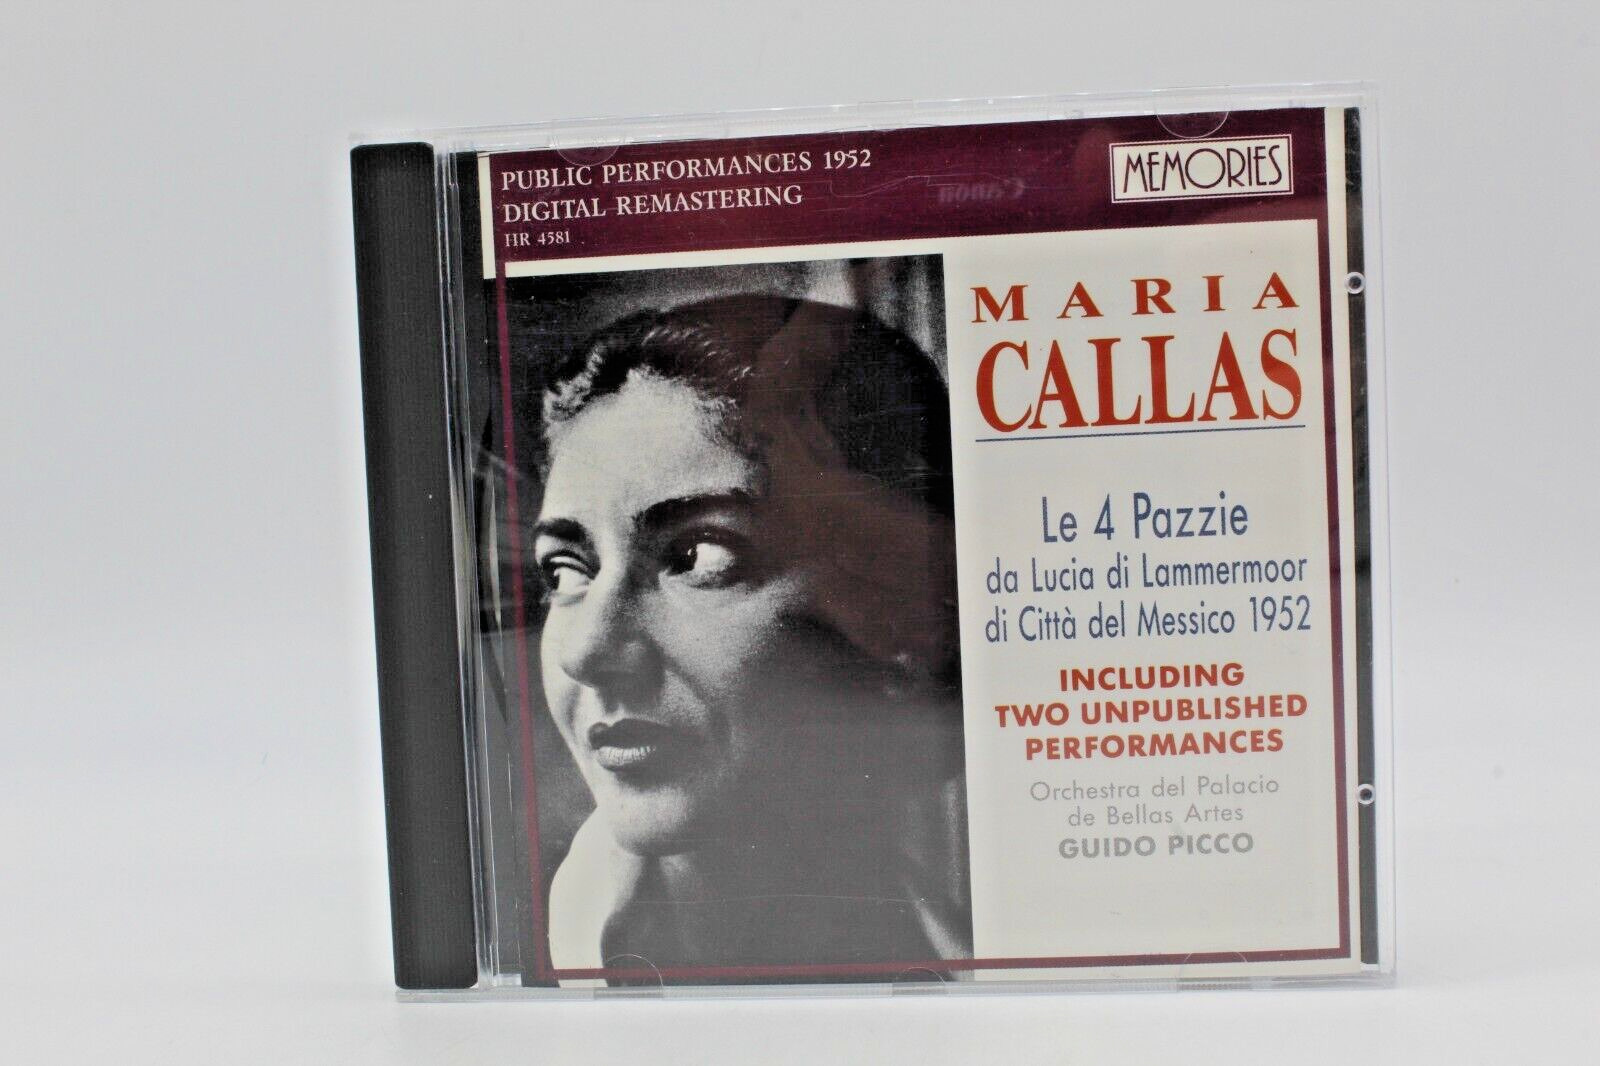 Maria Callas Live Recording Mexico City 1952 VTG Memories CD Italy Le 4 Pazzie